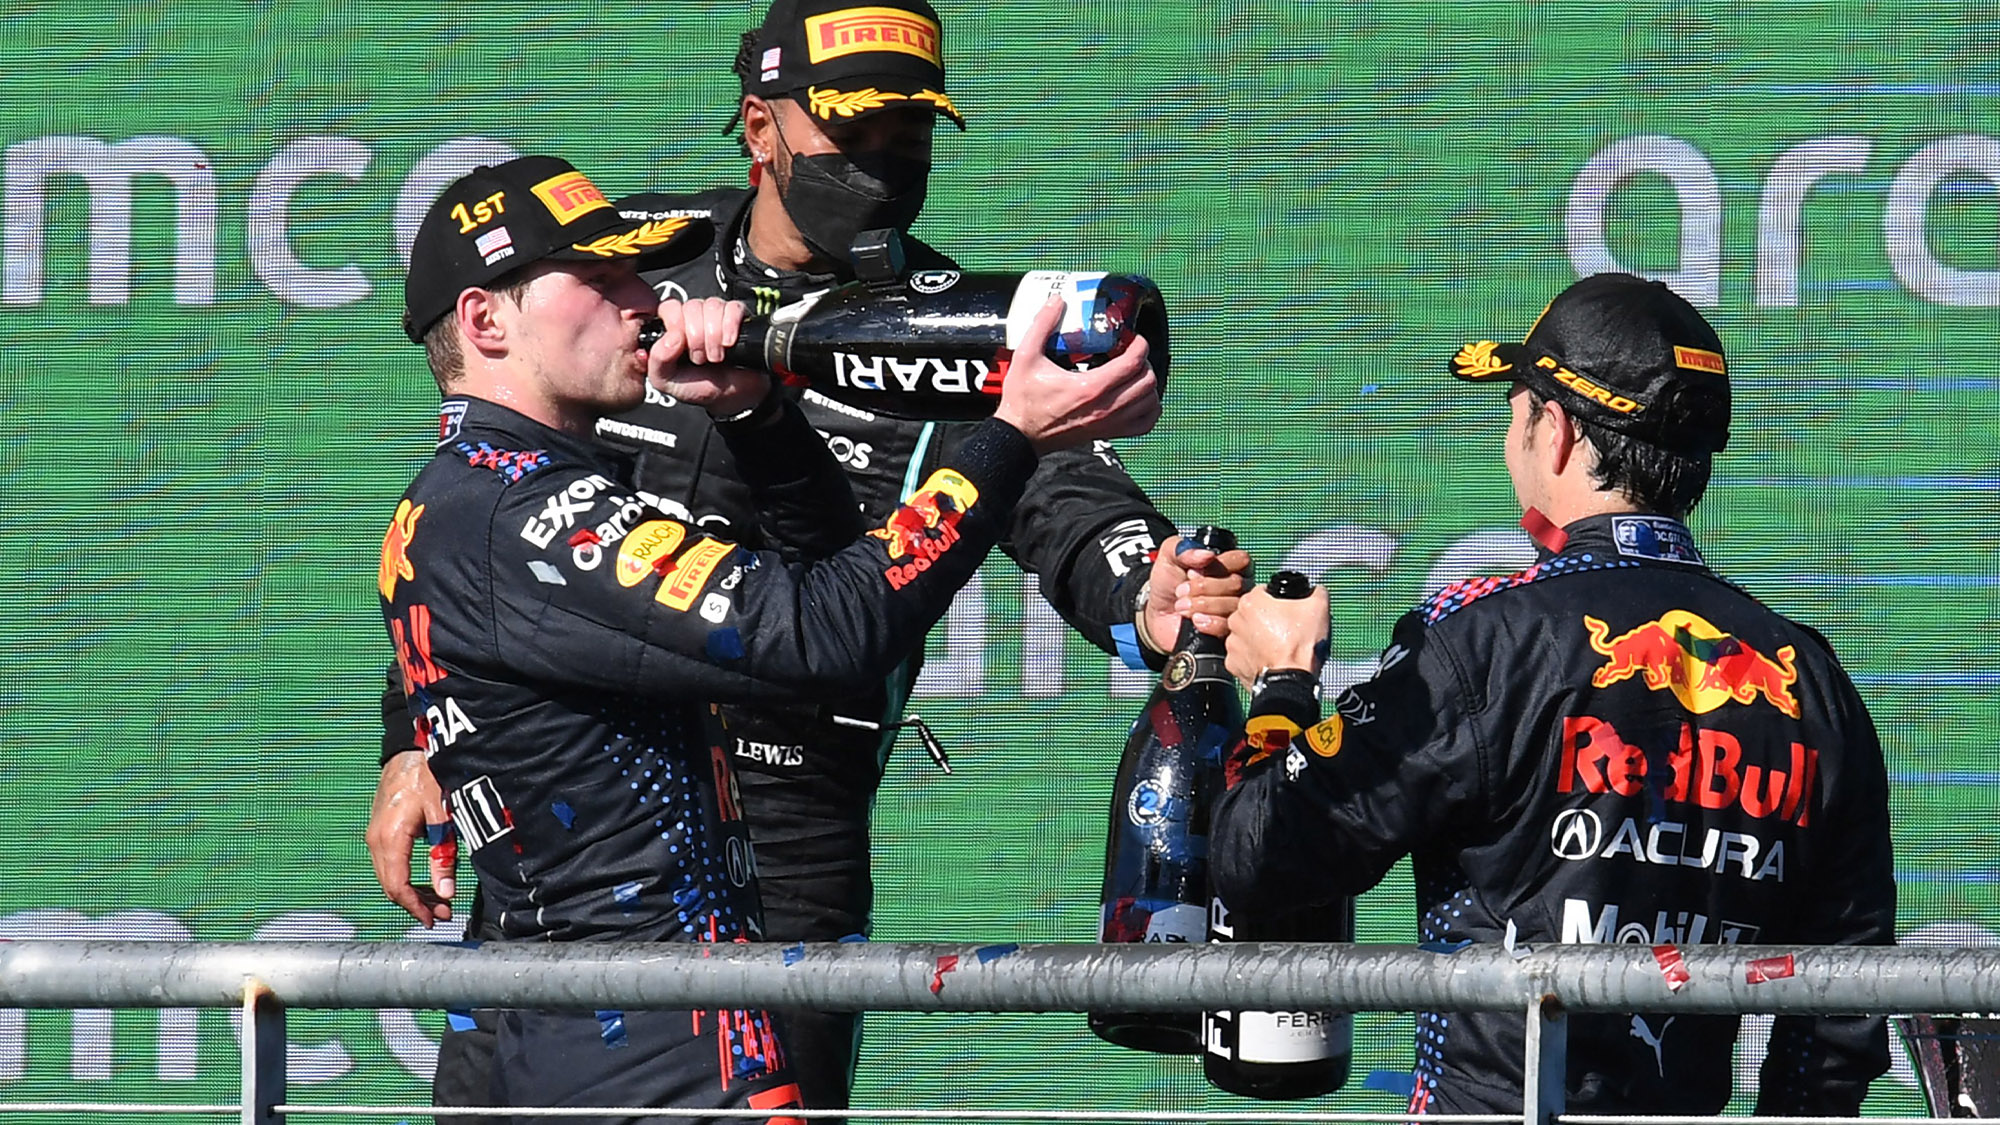 Hamilton Verstappen and Perez on the podium after 2021 US Grand Prix